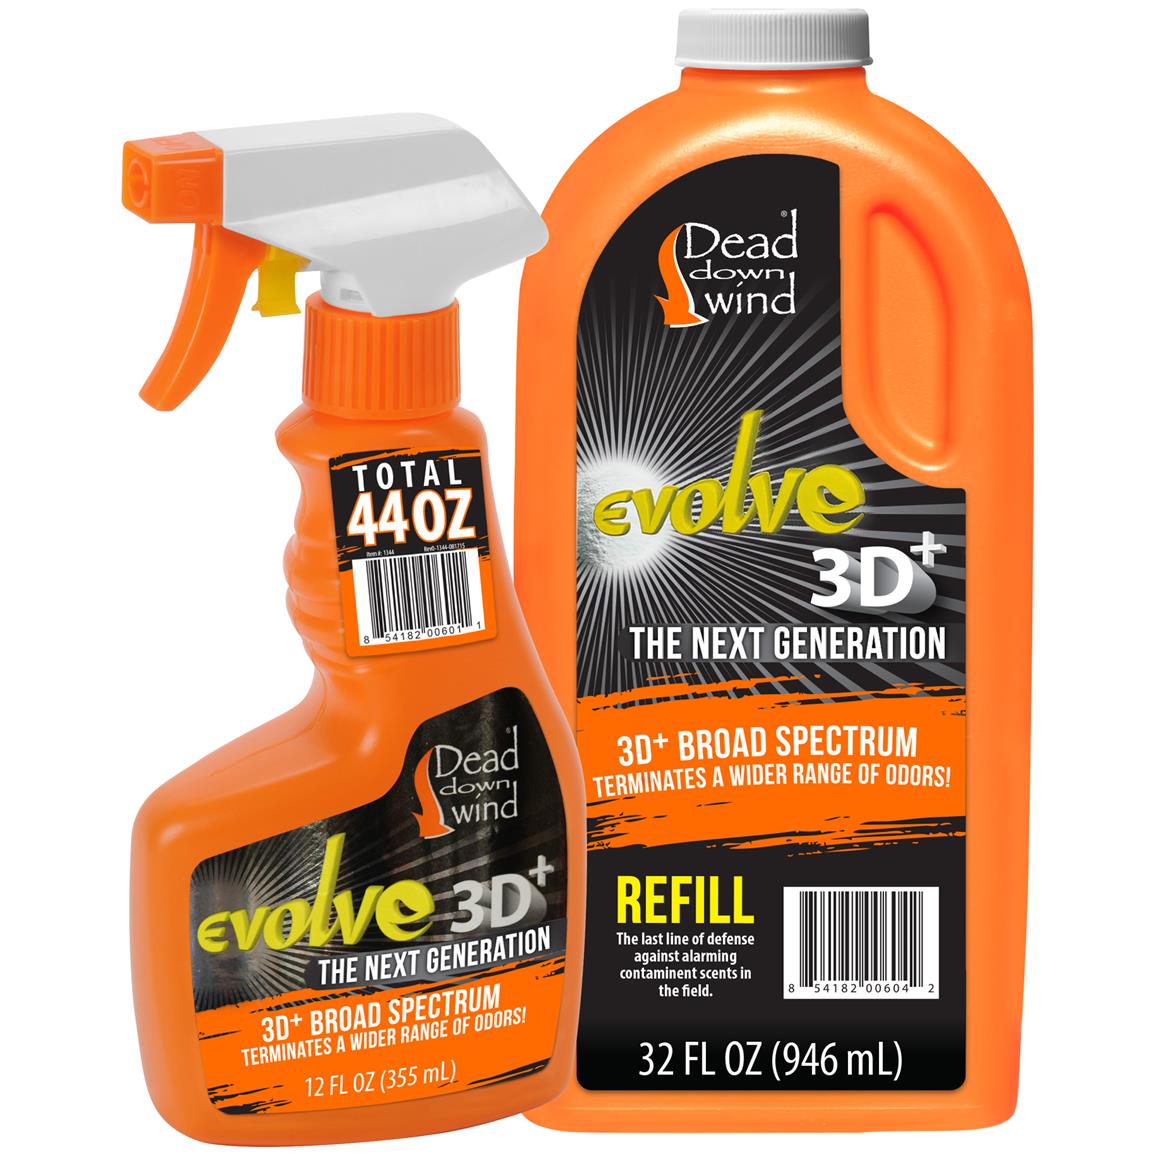 Dead Down Wind Evolve 3D+ Field Spray Combo, 76 oz.